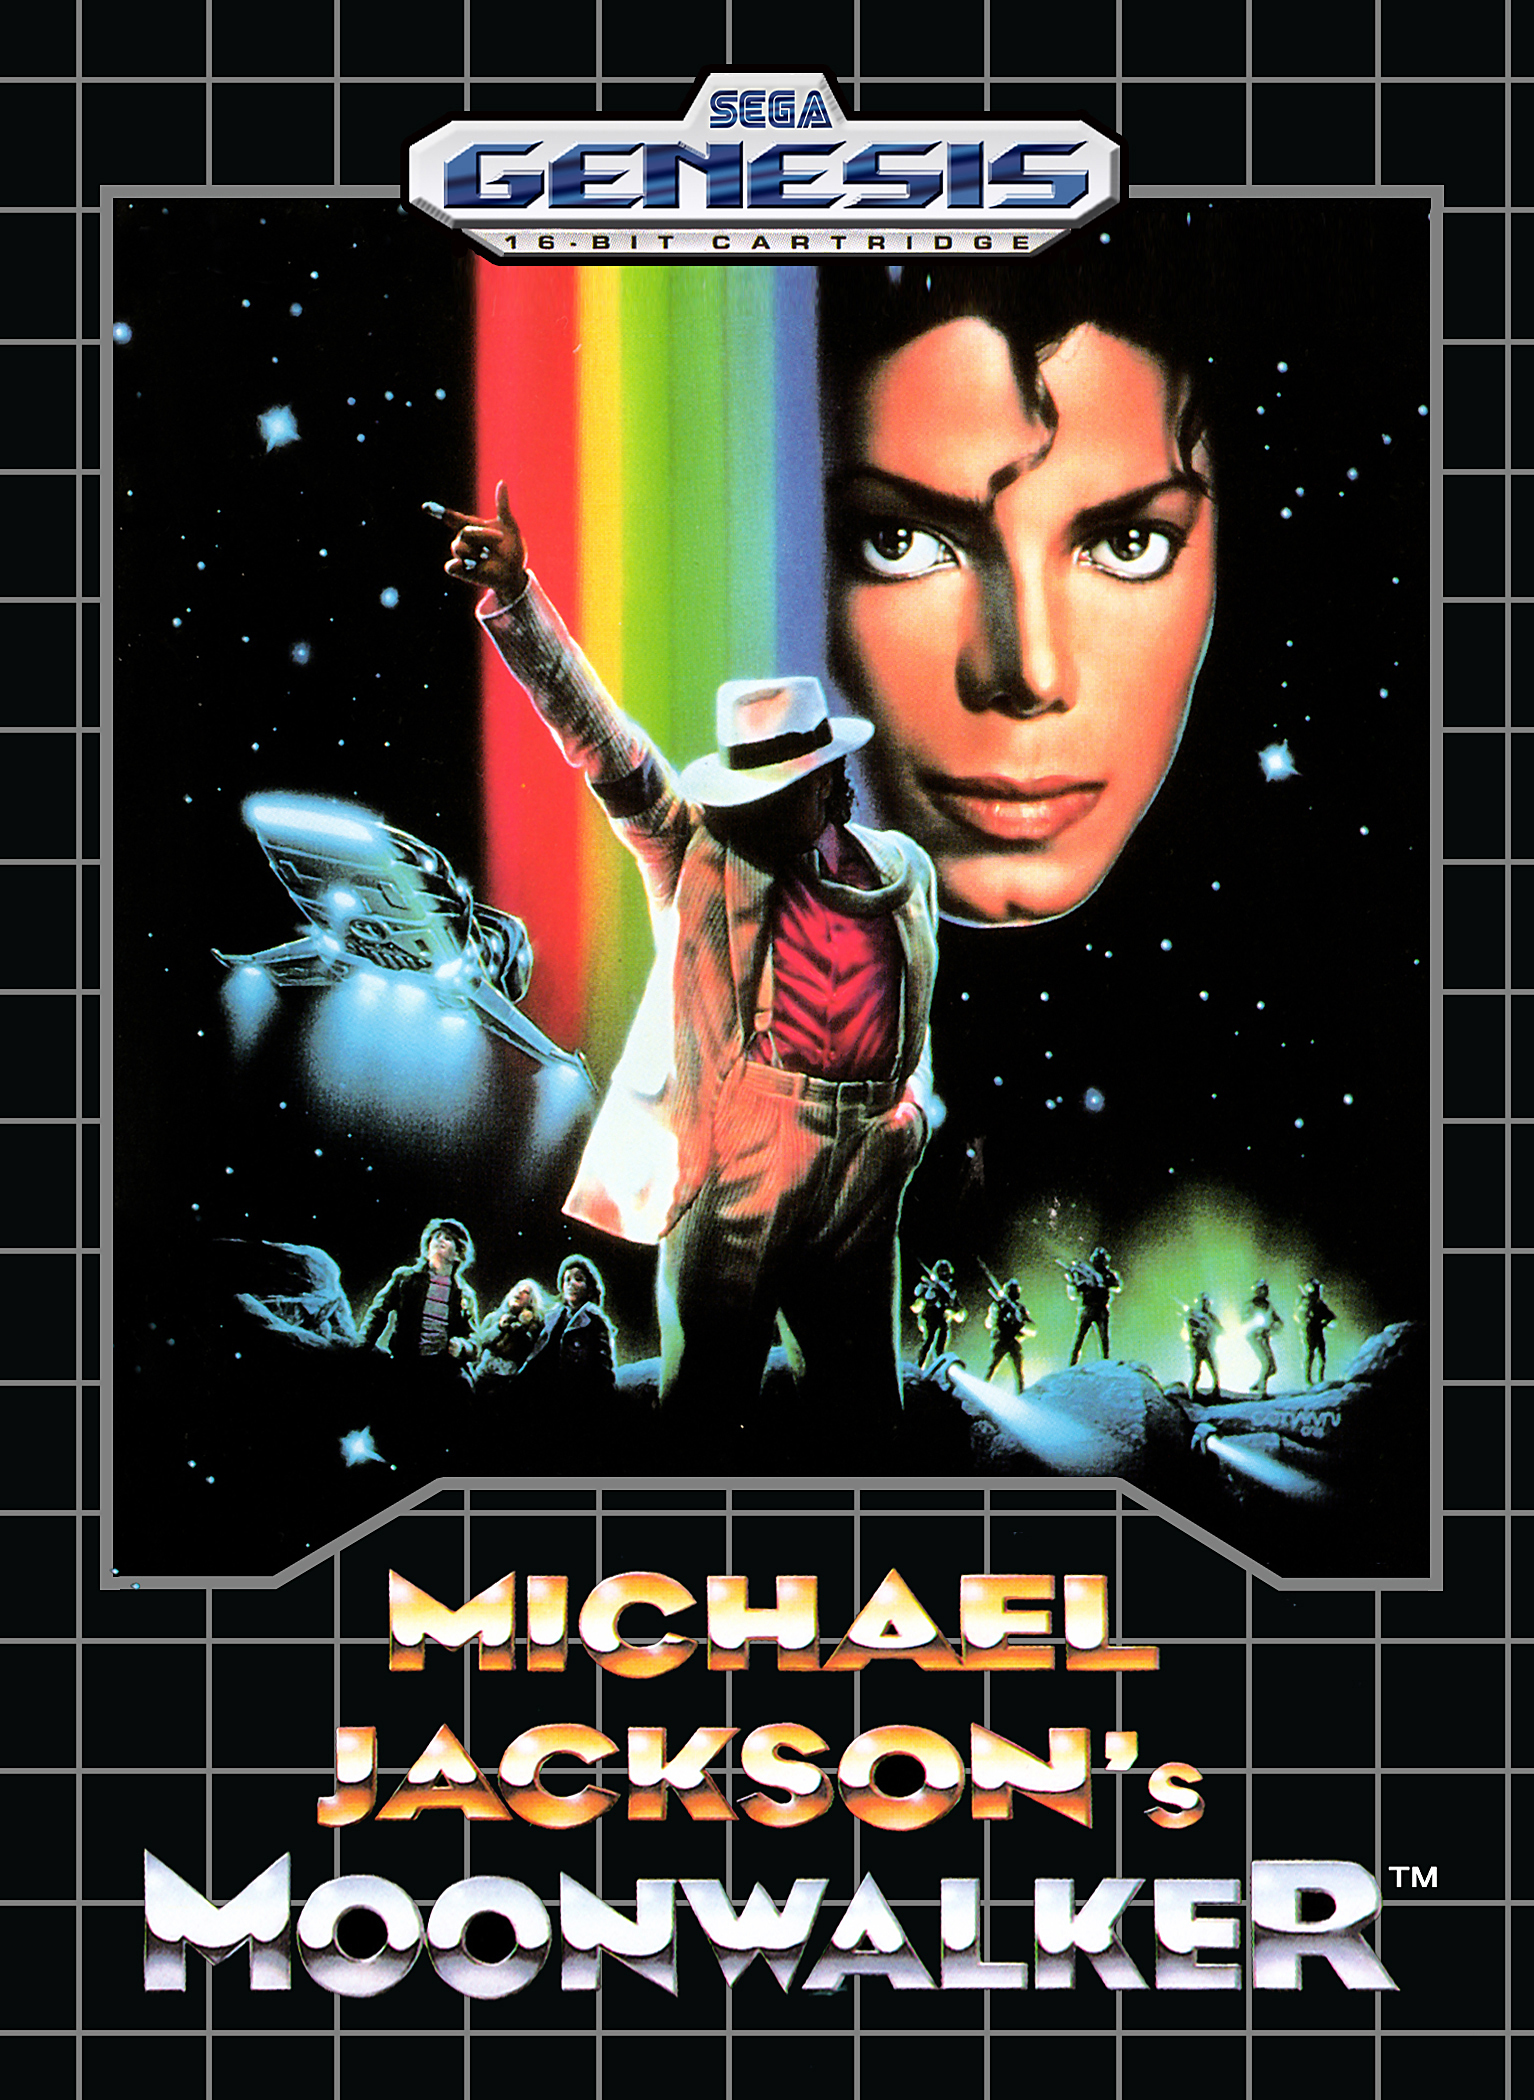 Michael jackson moonwalker. Michael Jackson Moonwalker Sega. Michael Jackson's Moonwalker Sega Genesis. Игра Michael Jackson's Moonwalker Rus Sega.